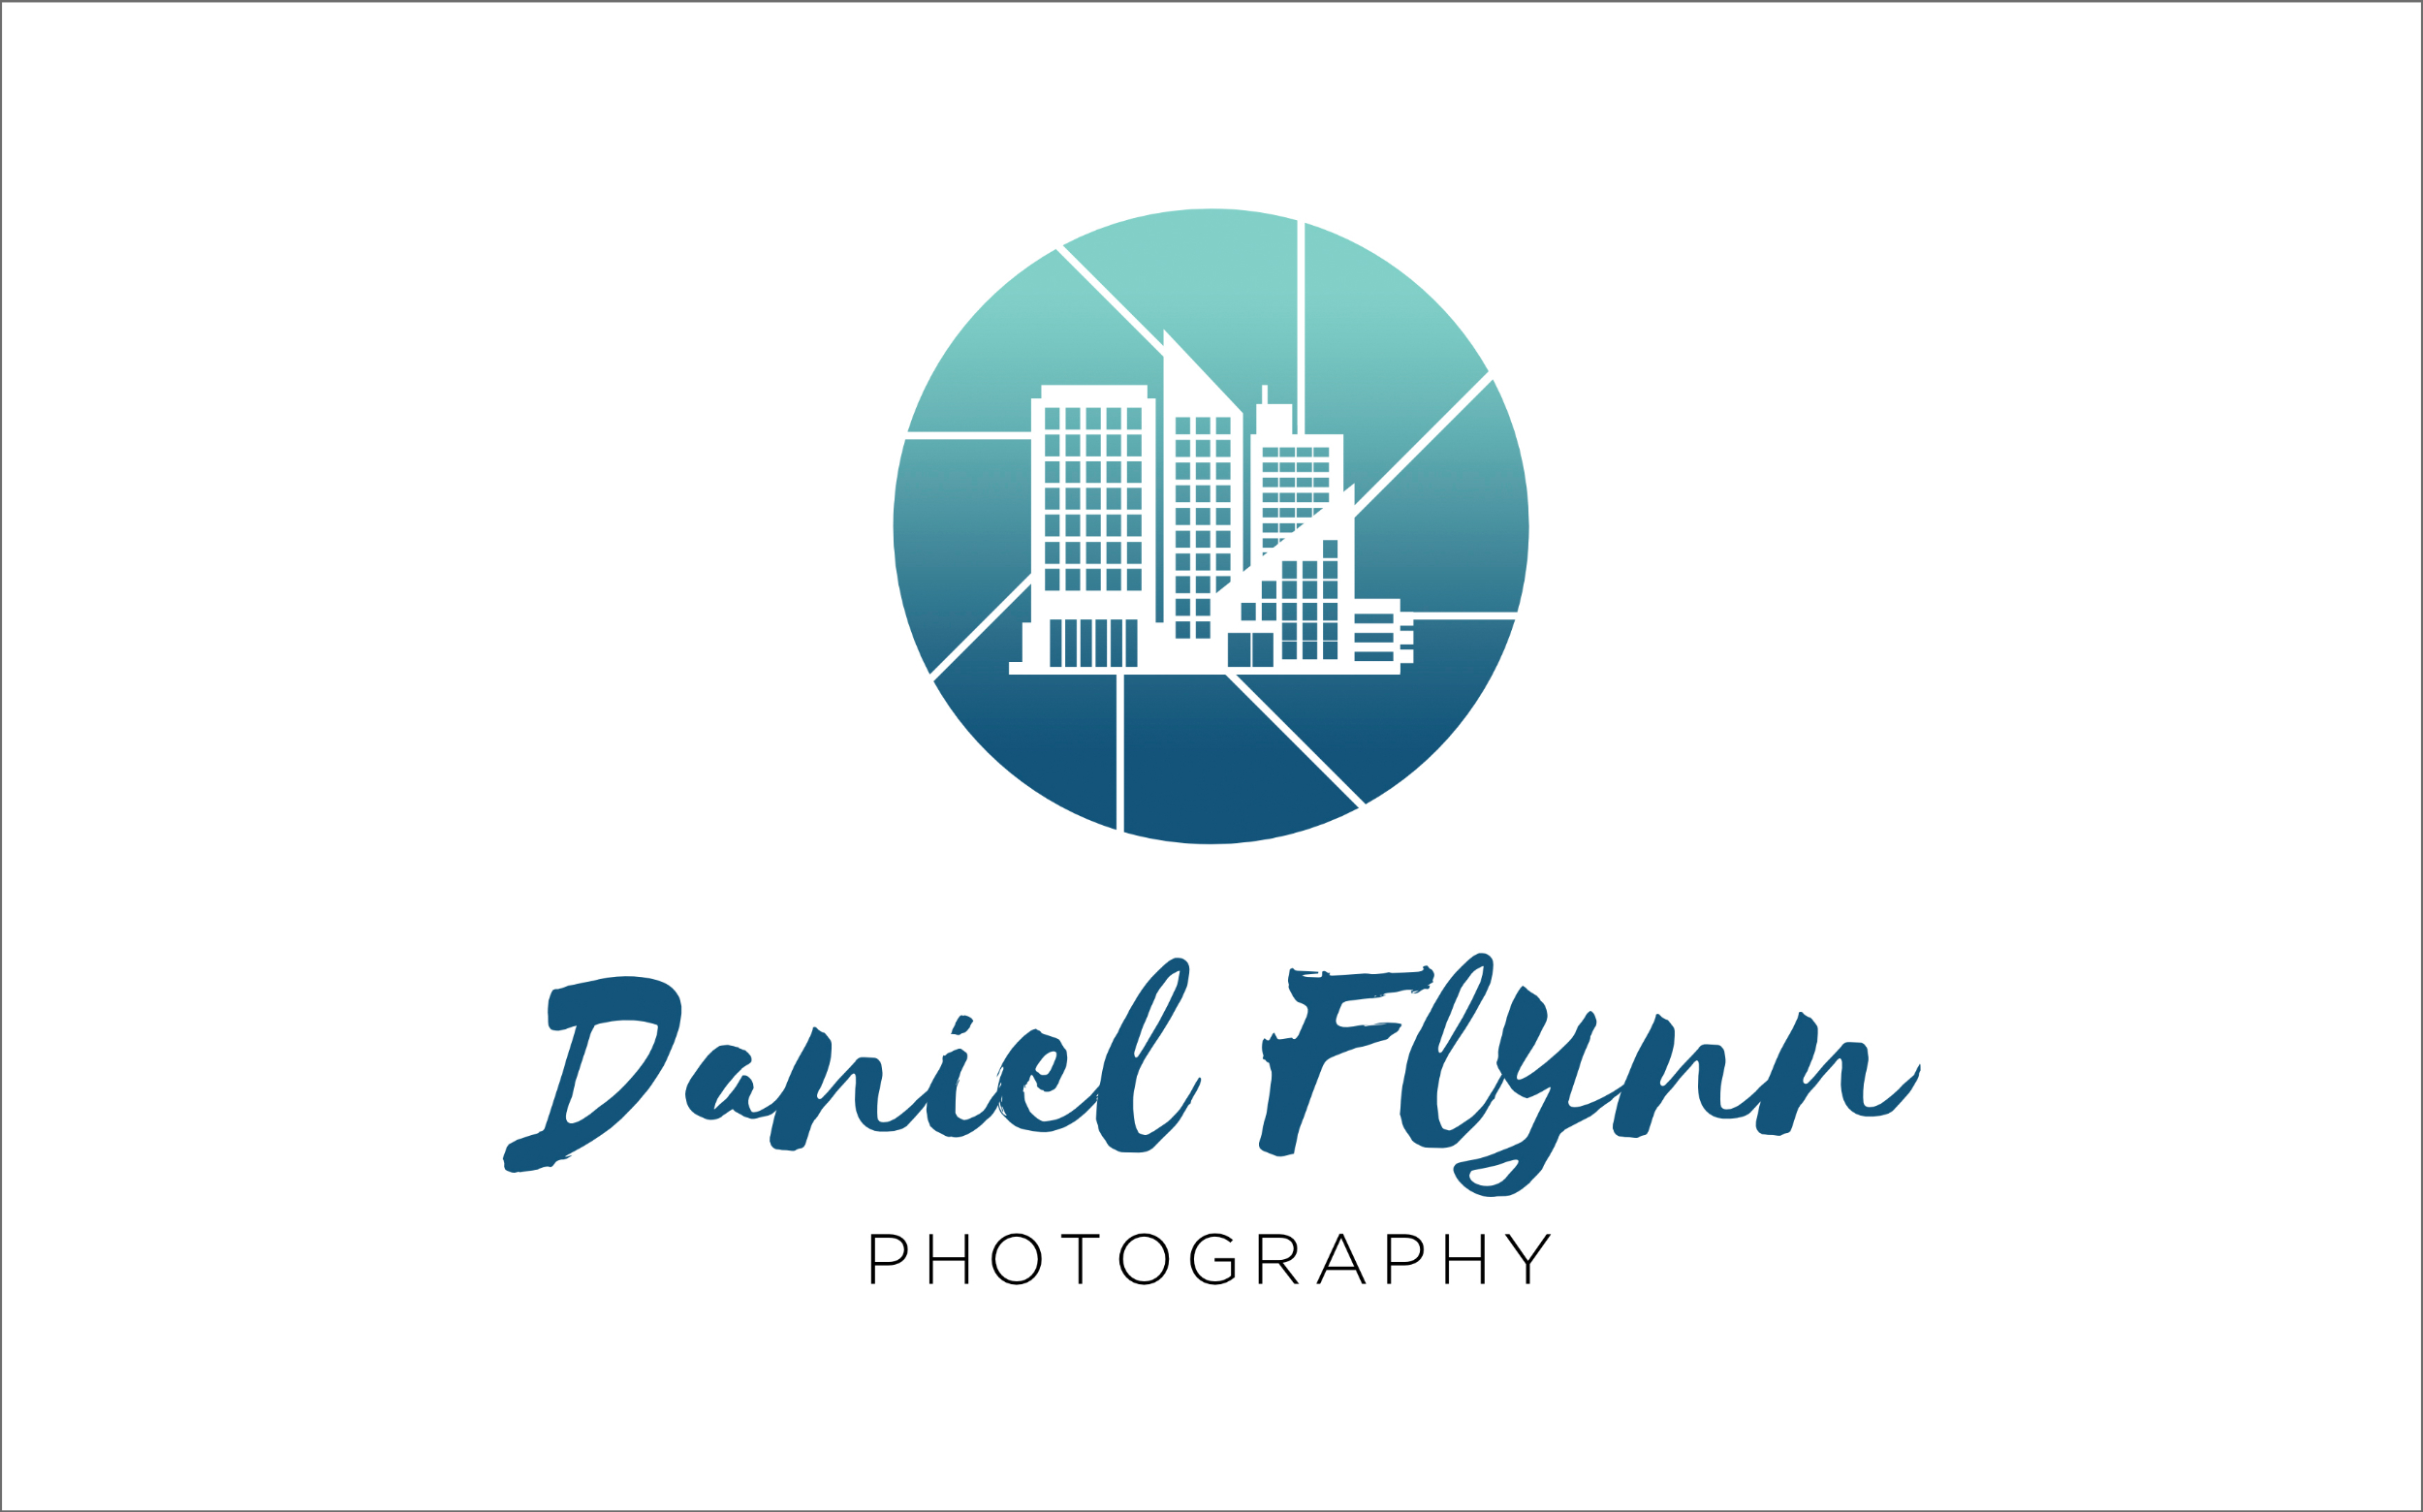 Logo Design for Daniel Flynn Photography.  Made by Jon Glanville - Plymouth Graphic Designer.